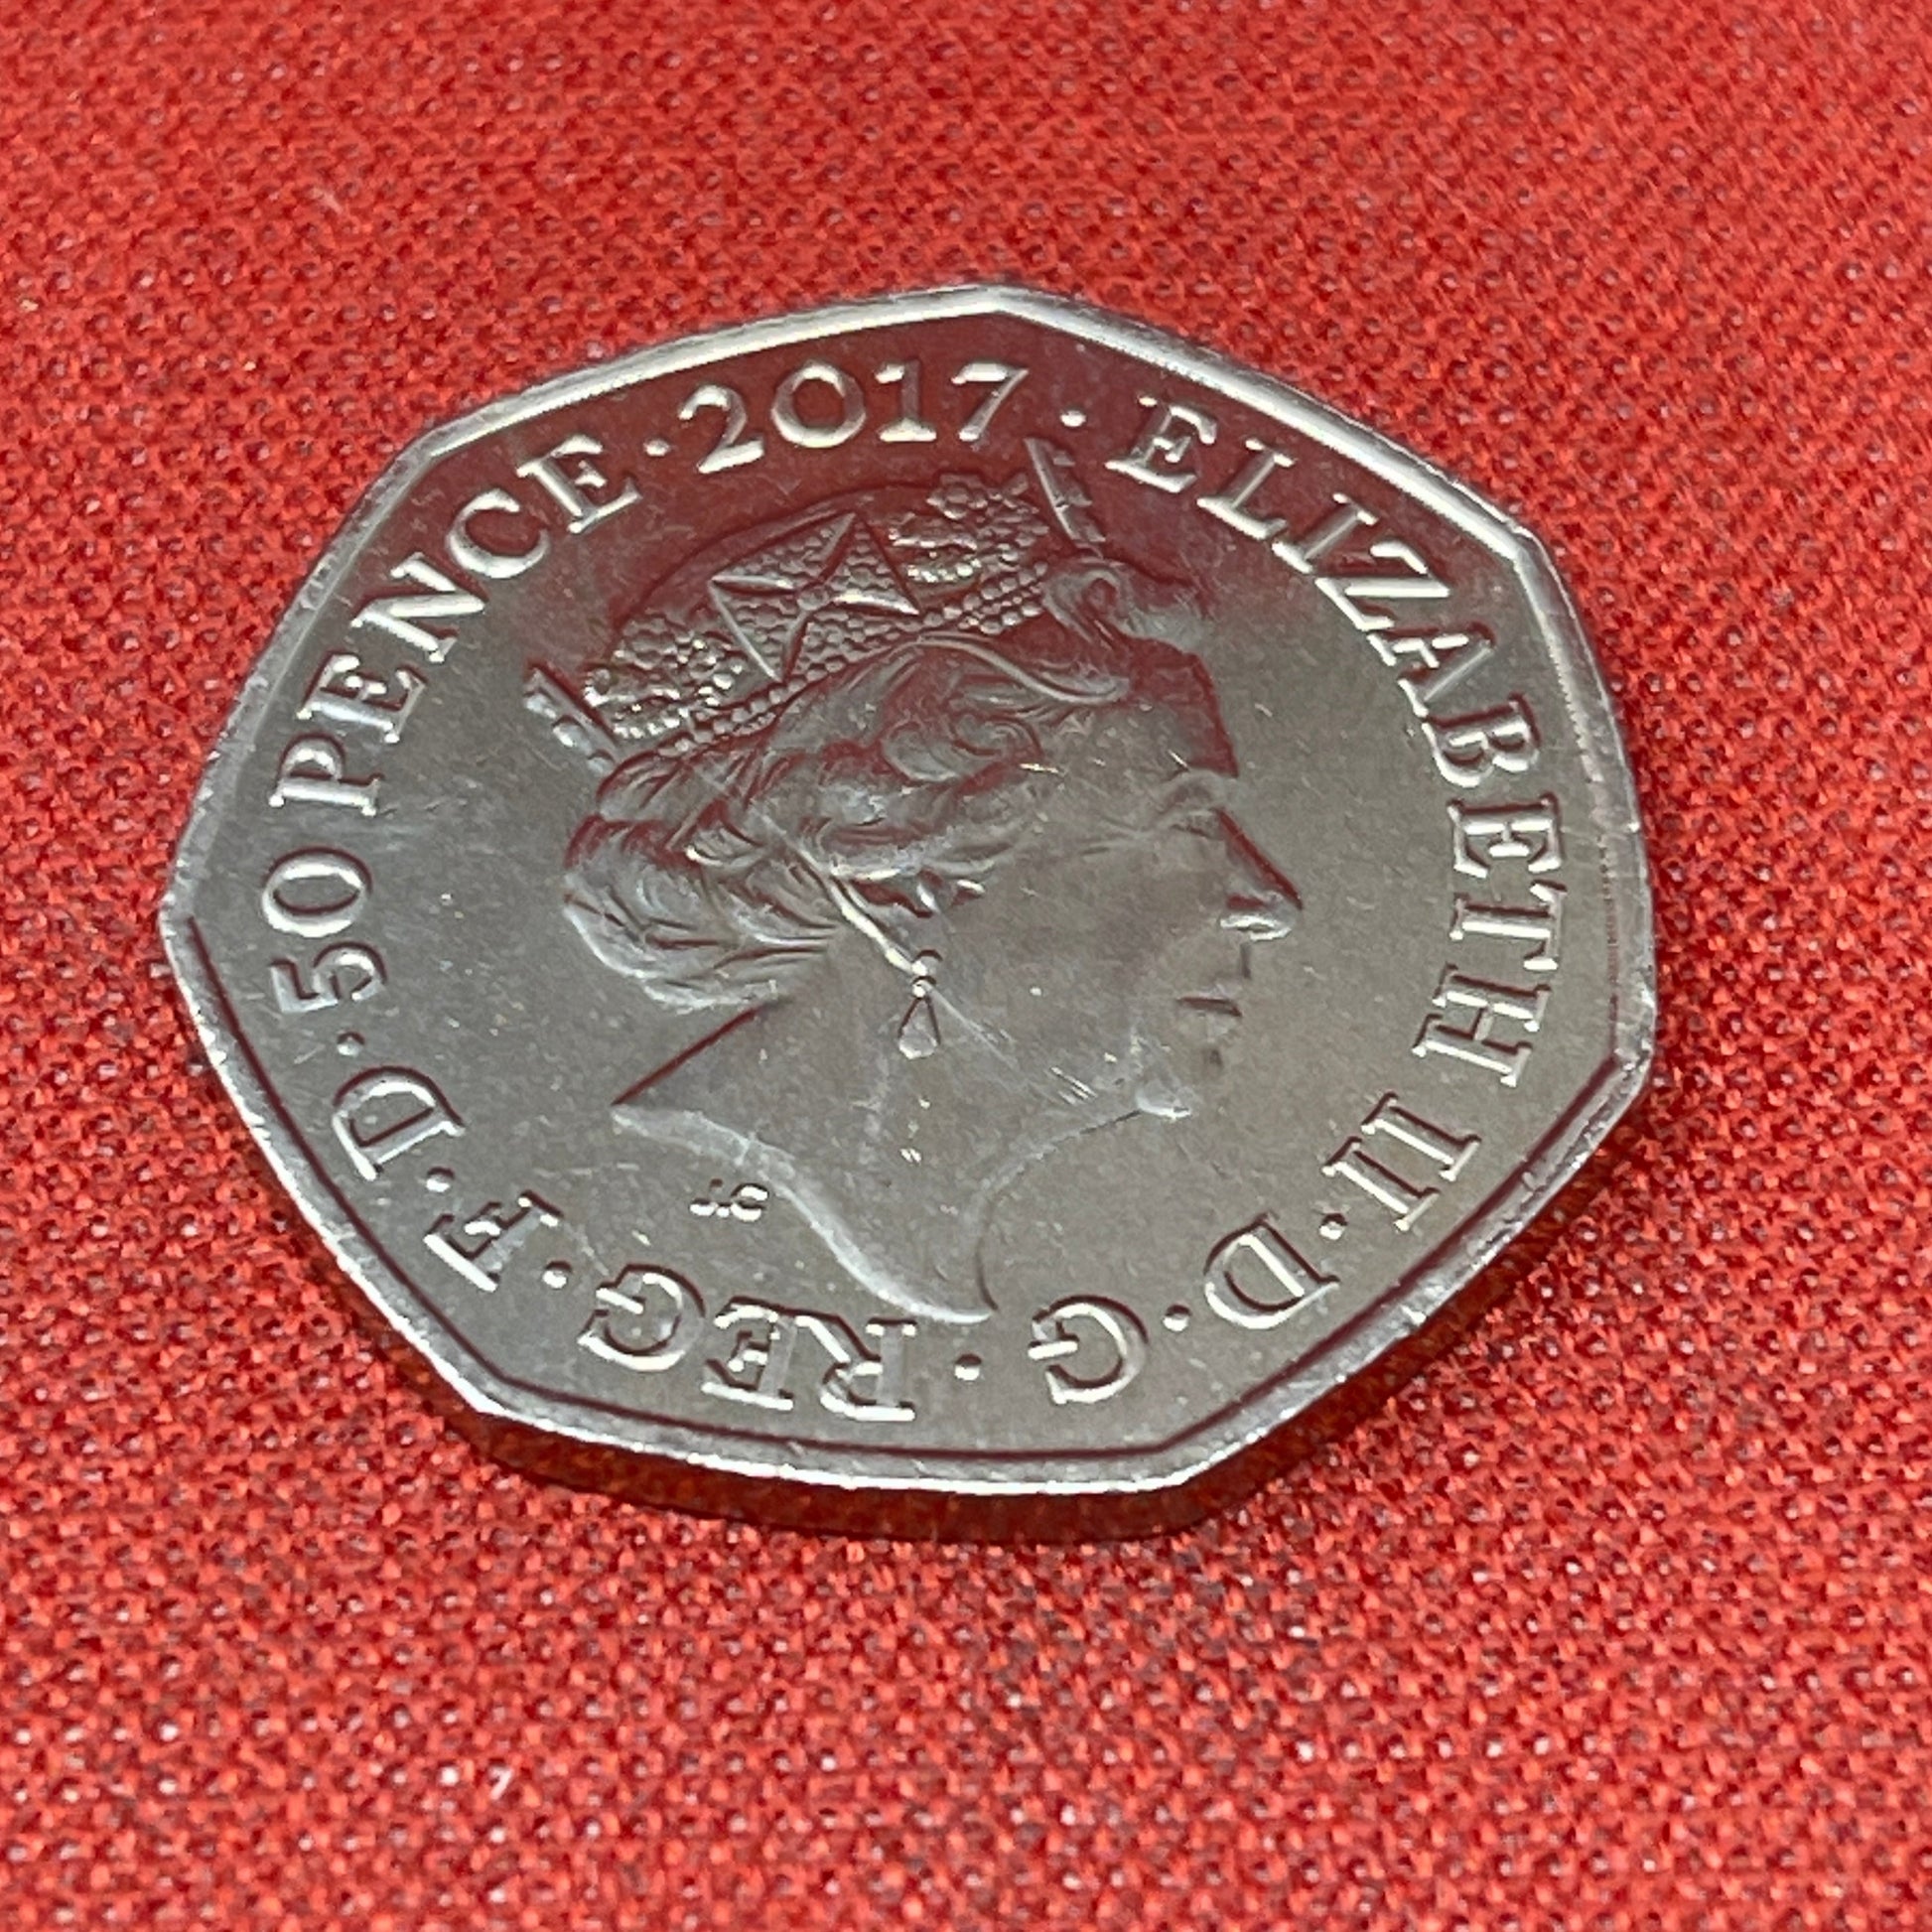 Benjamin Bunny 50p Coin 2017 celebrating the works of Beatrix Potter.